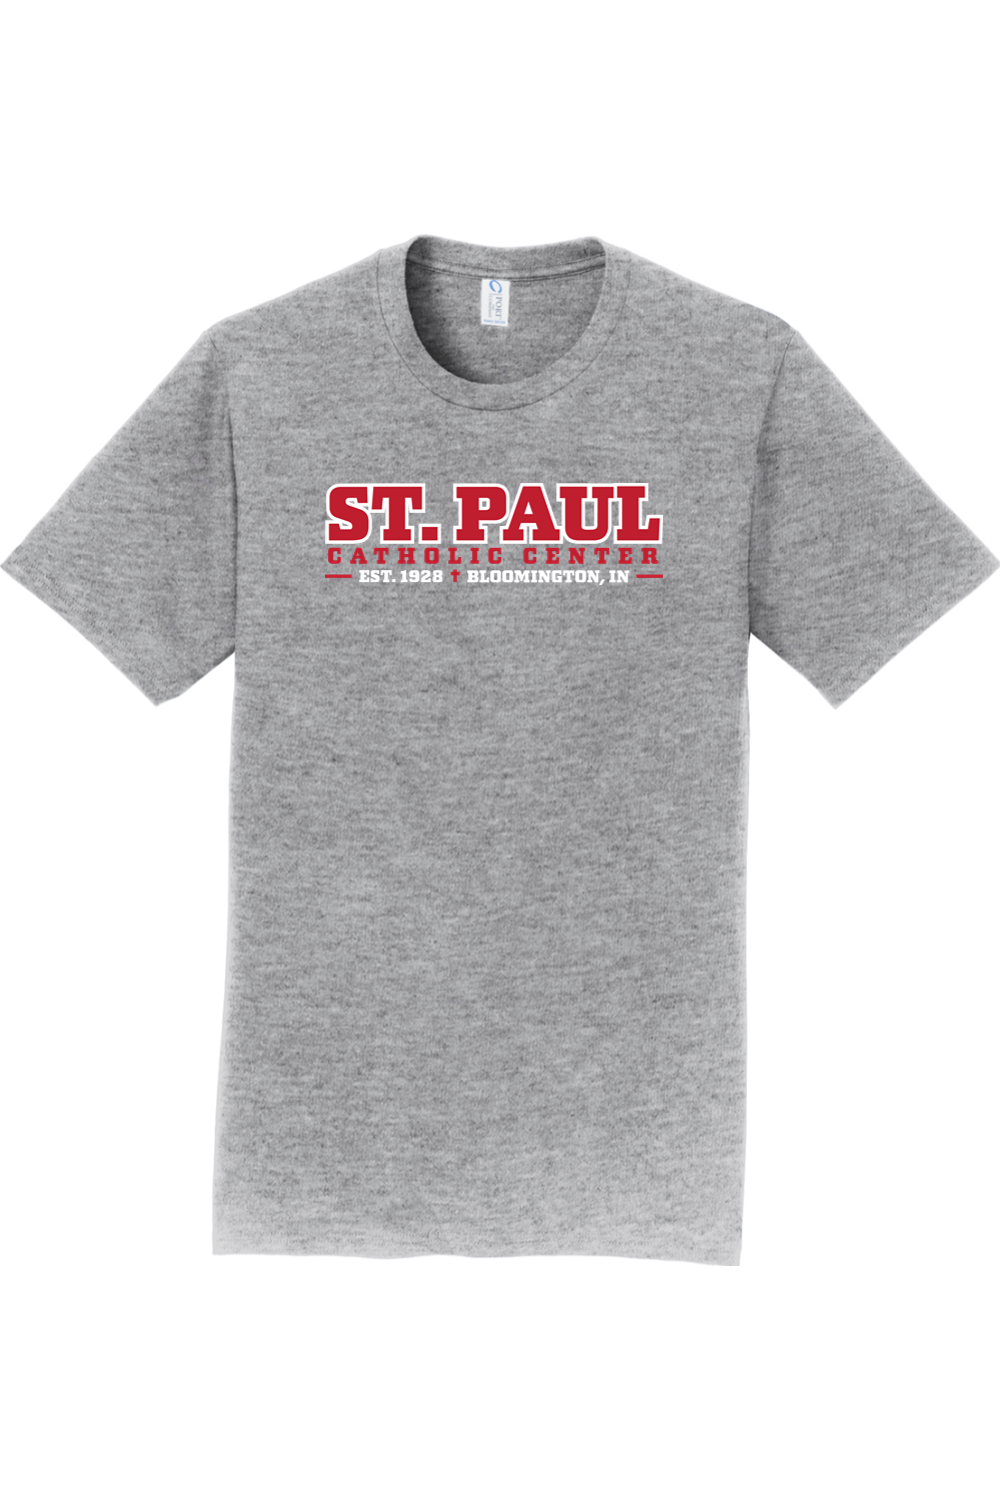 St Paul Catholic Center - SP47408 - T-Shirt